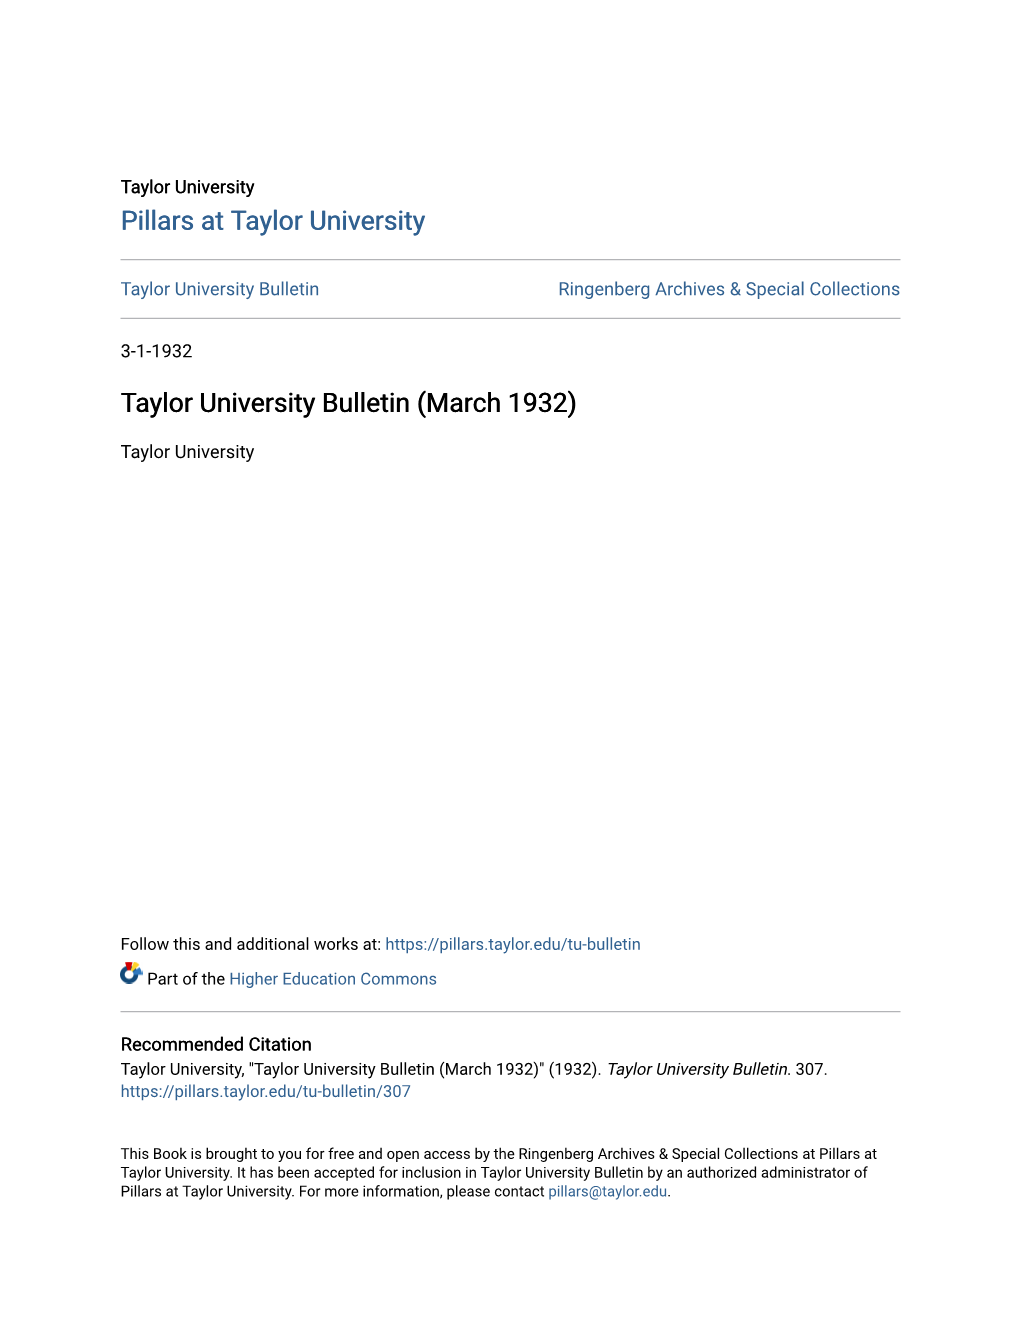 Taylor University Bulletin (March 1932)